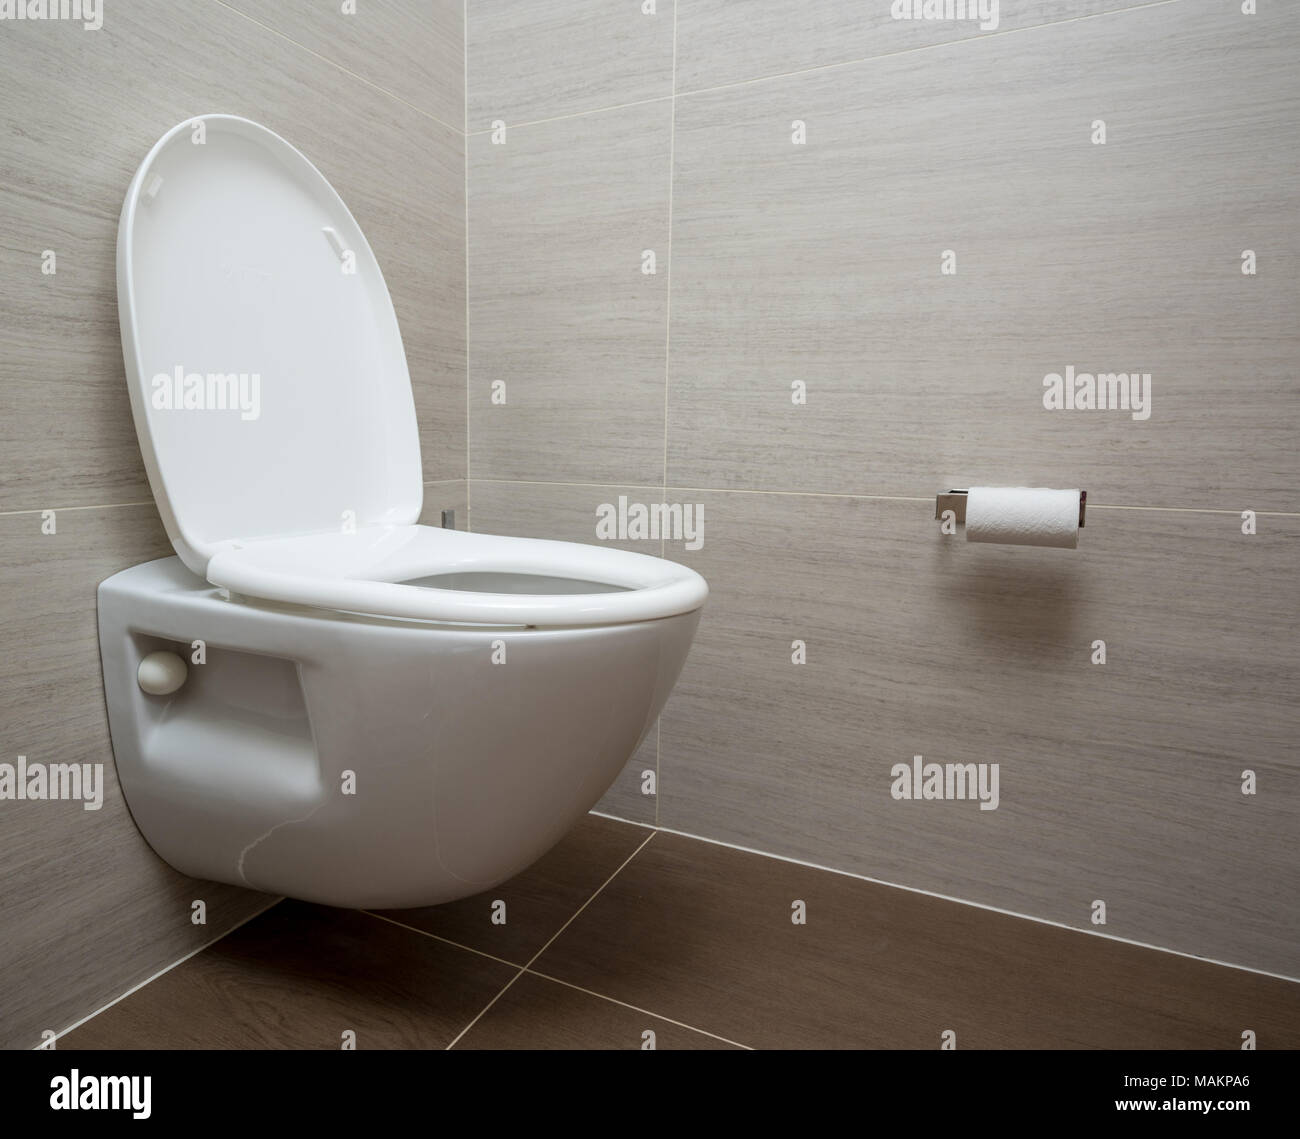 Moderne wc oder WC in cruise ship Kabine Stockfoto